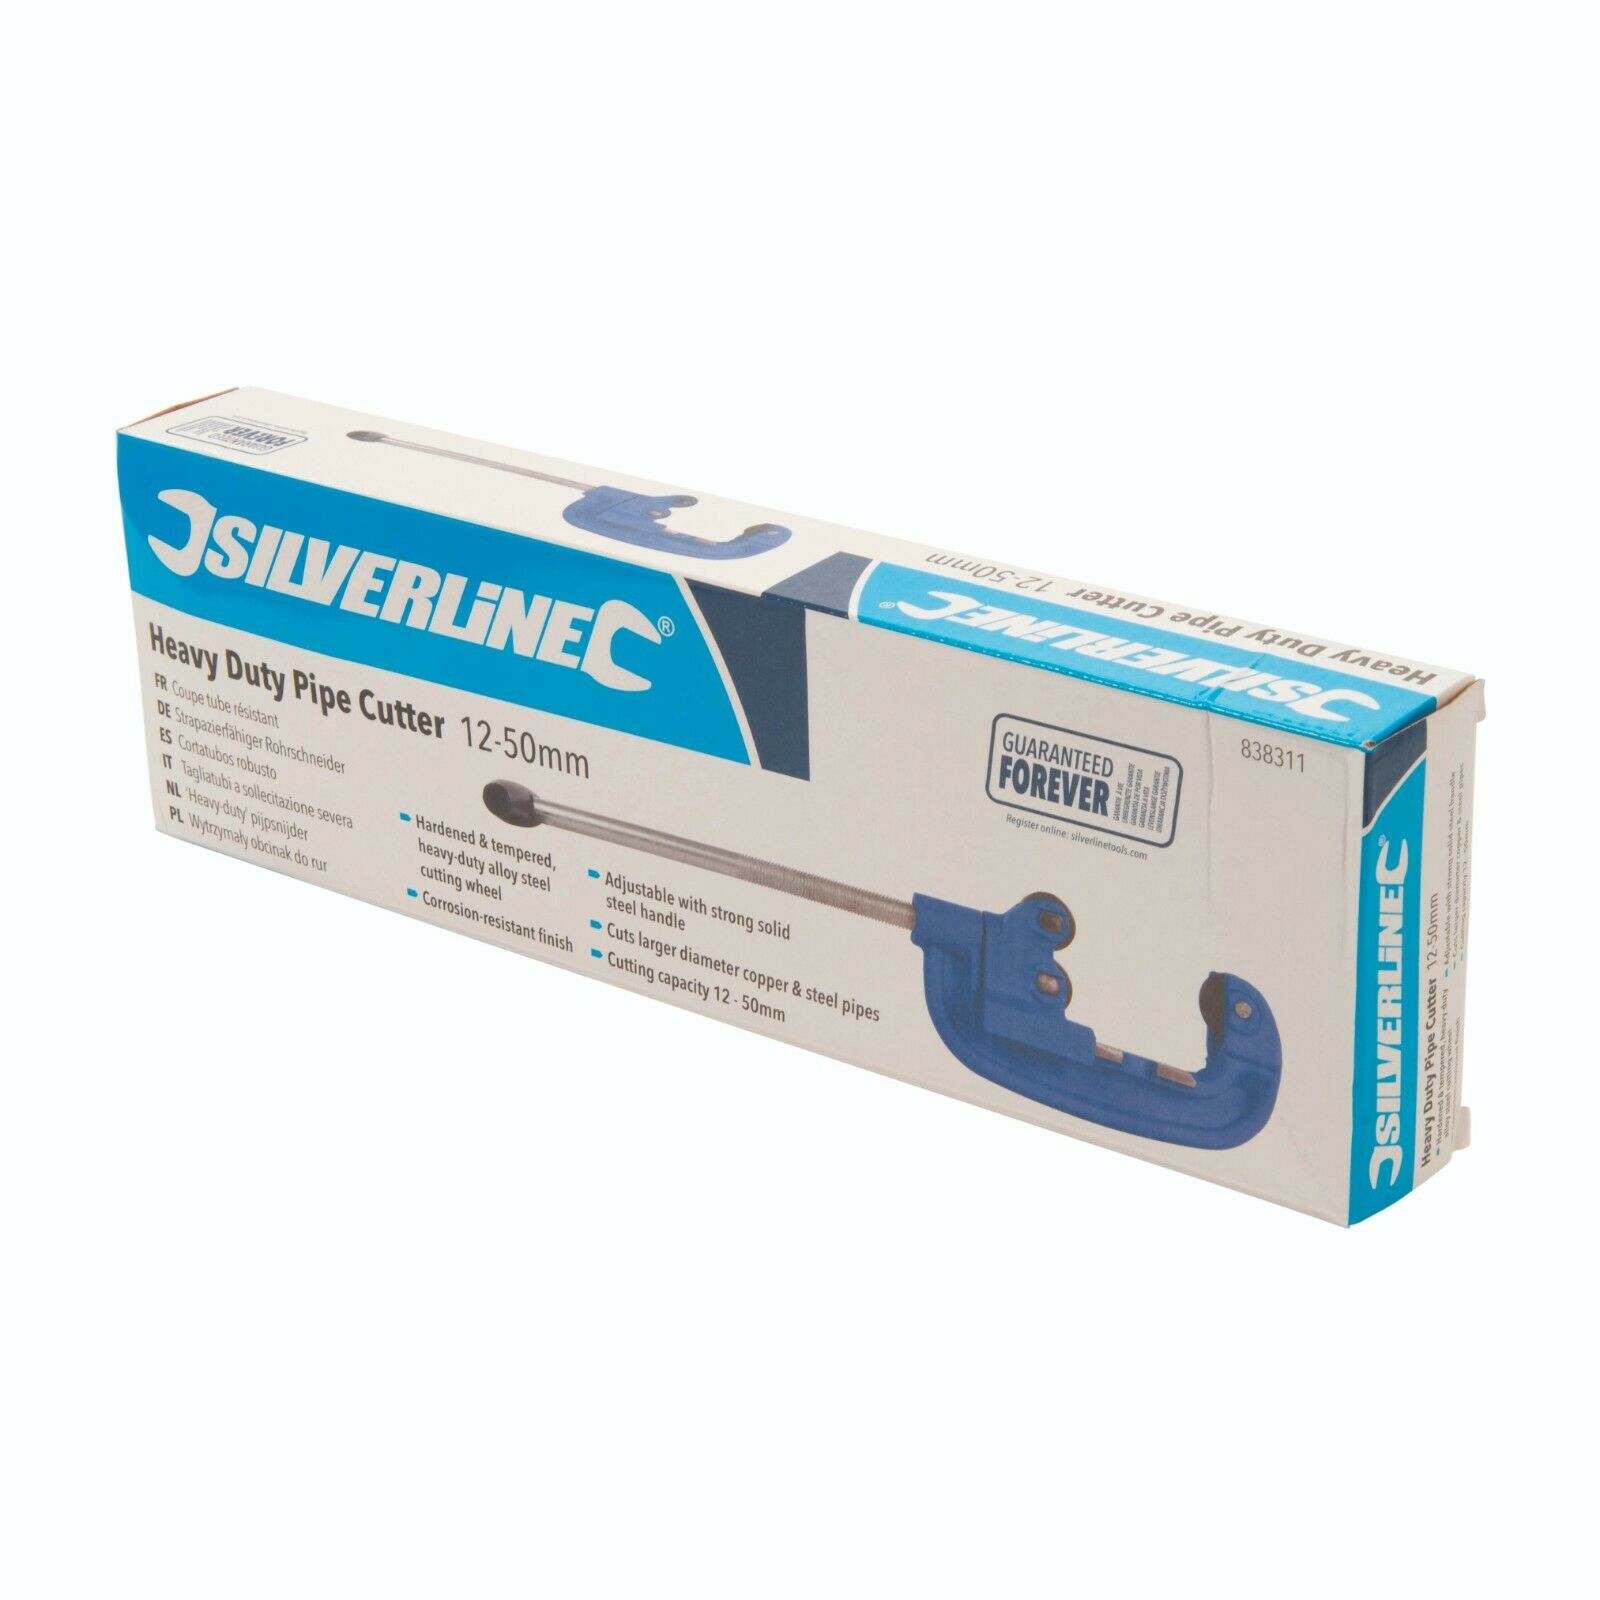 Silverline 838311 Heavy Duty Pipe Cutter Capacity 12mm 50mm Plumbing Tools 